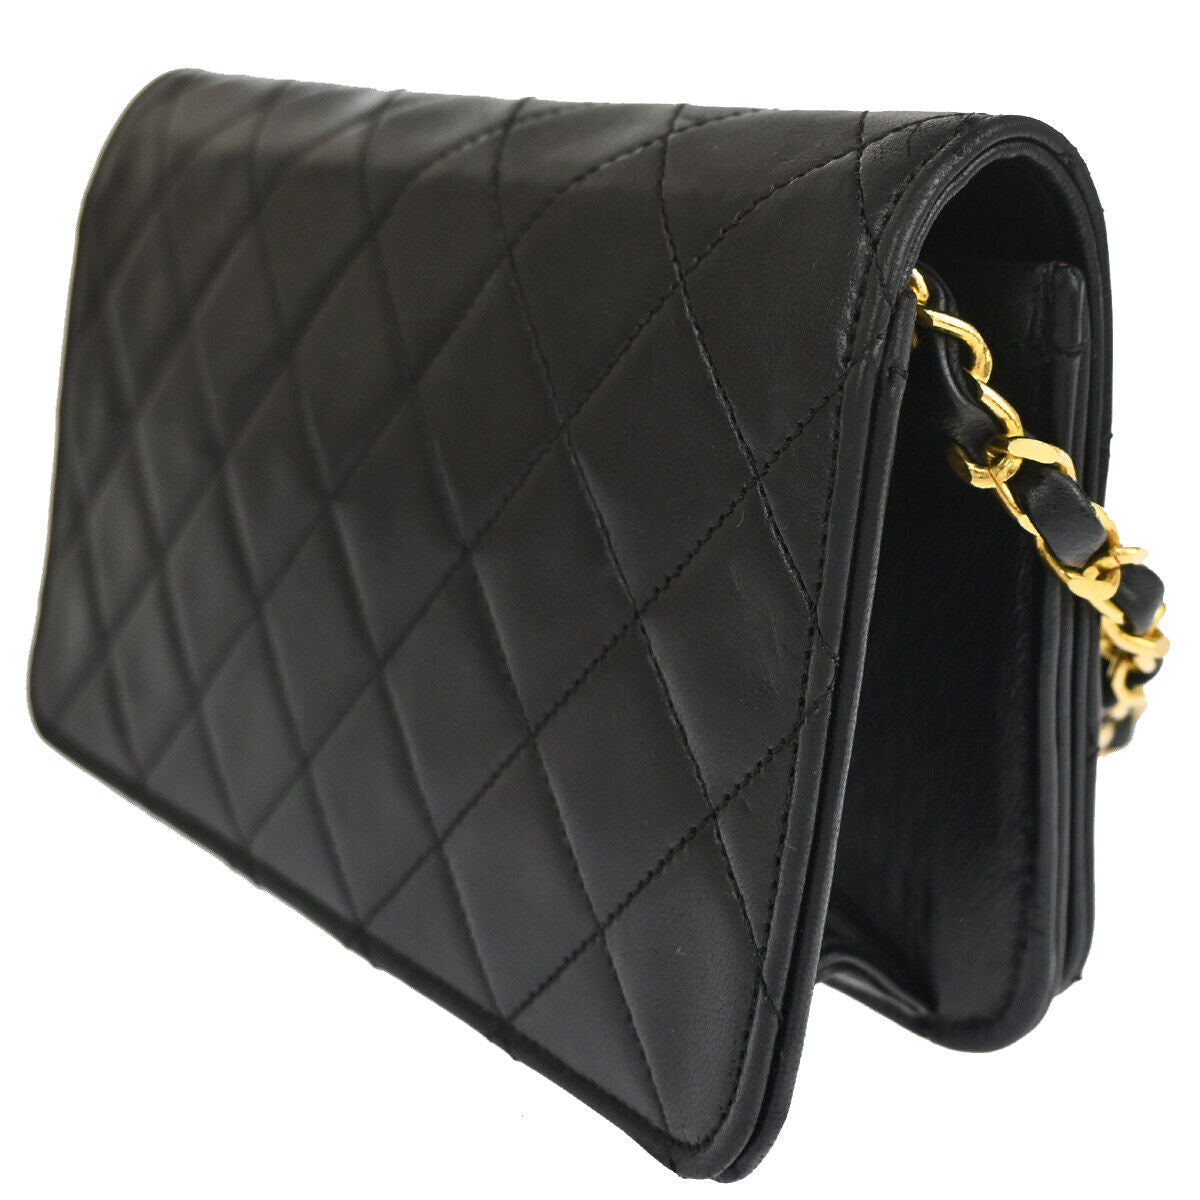 Chanel Wallet On Chain Black Leather Shoulder Bag (Pre-Owned)